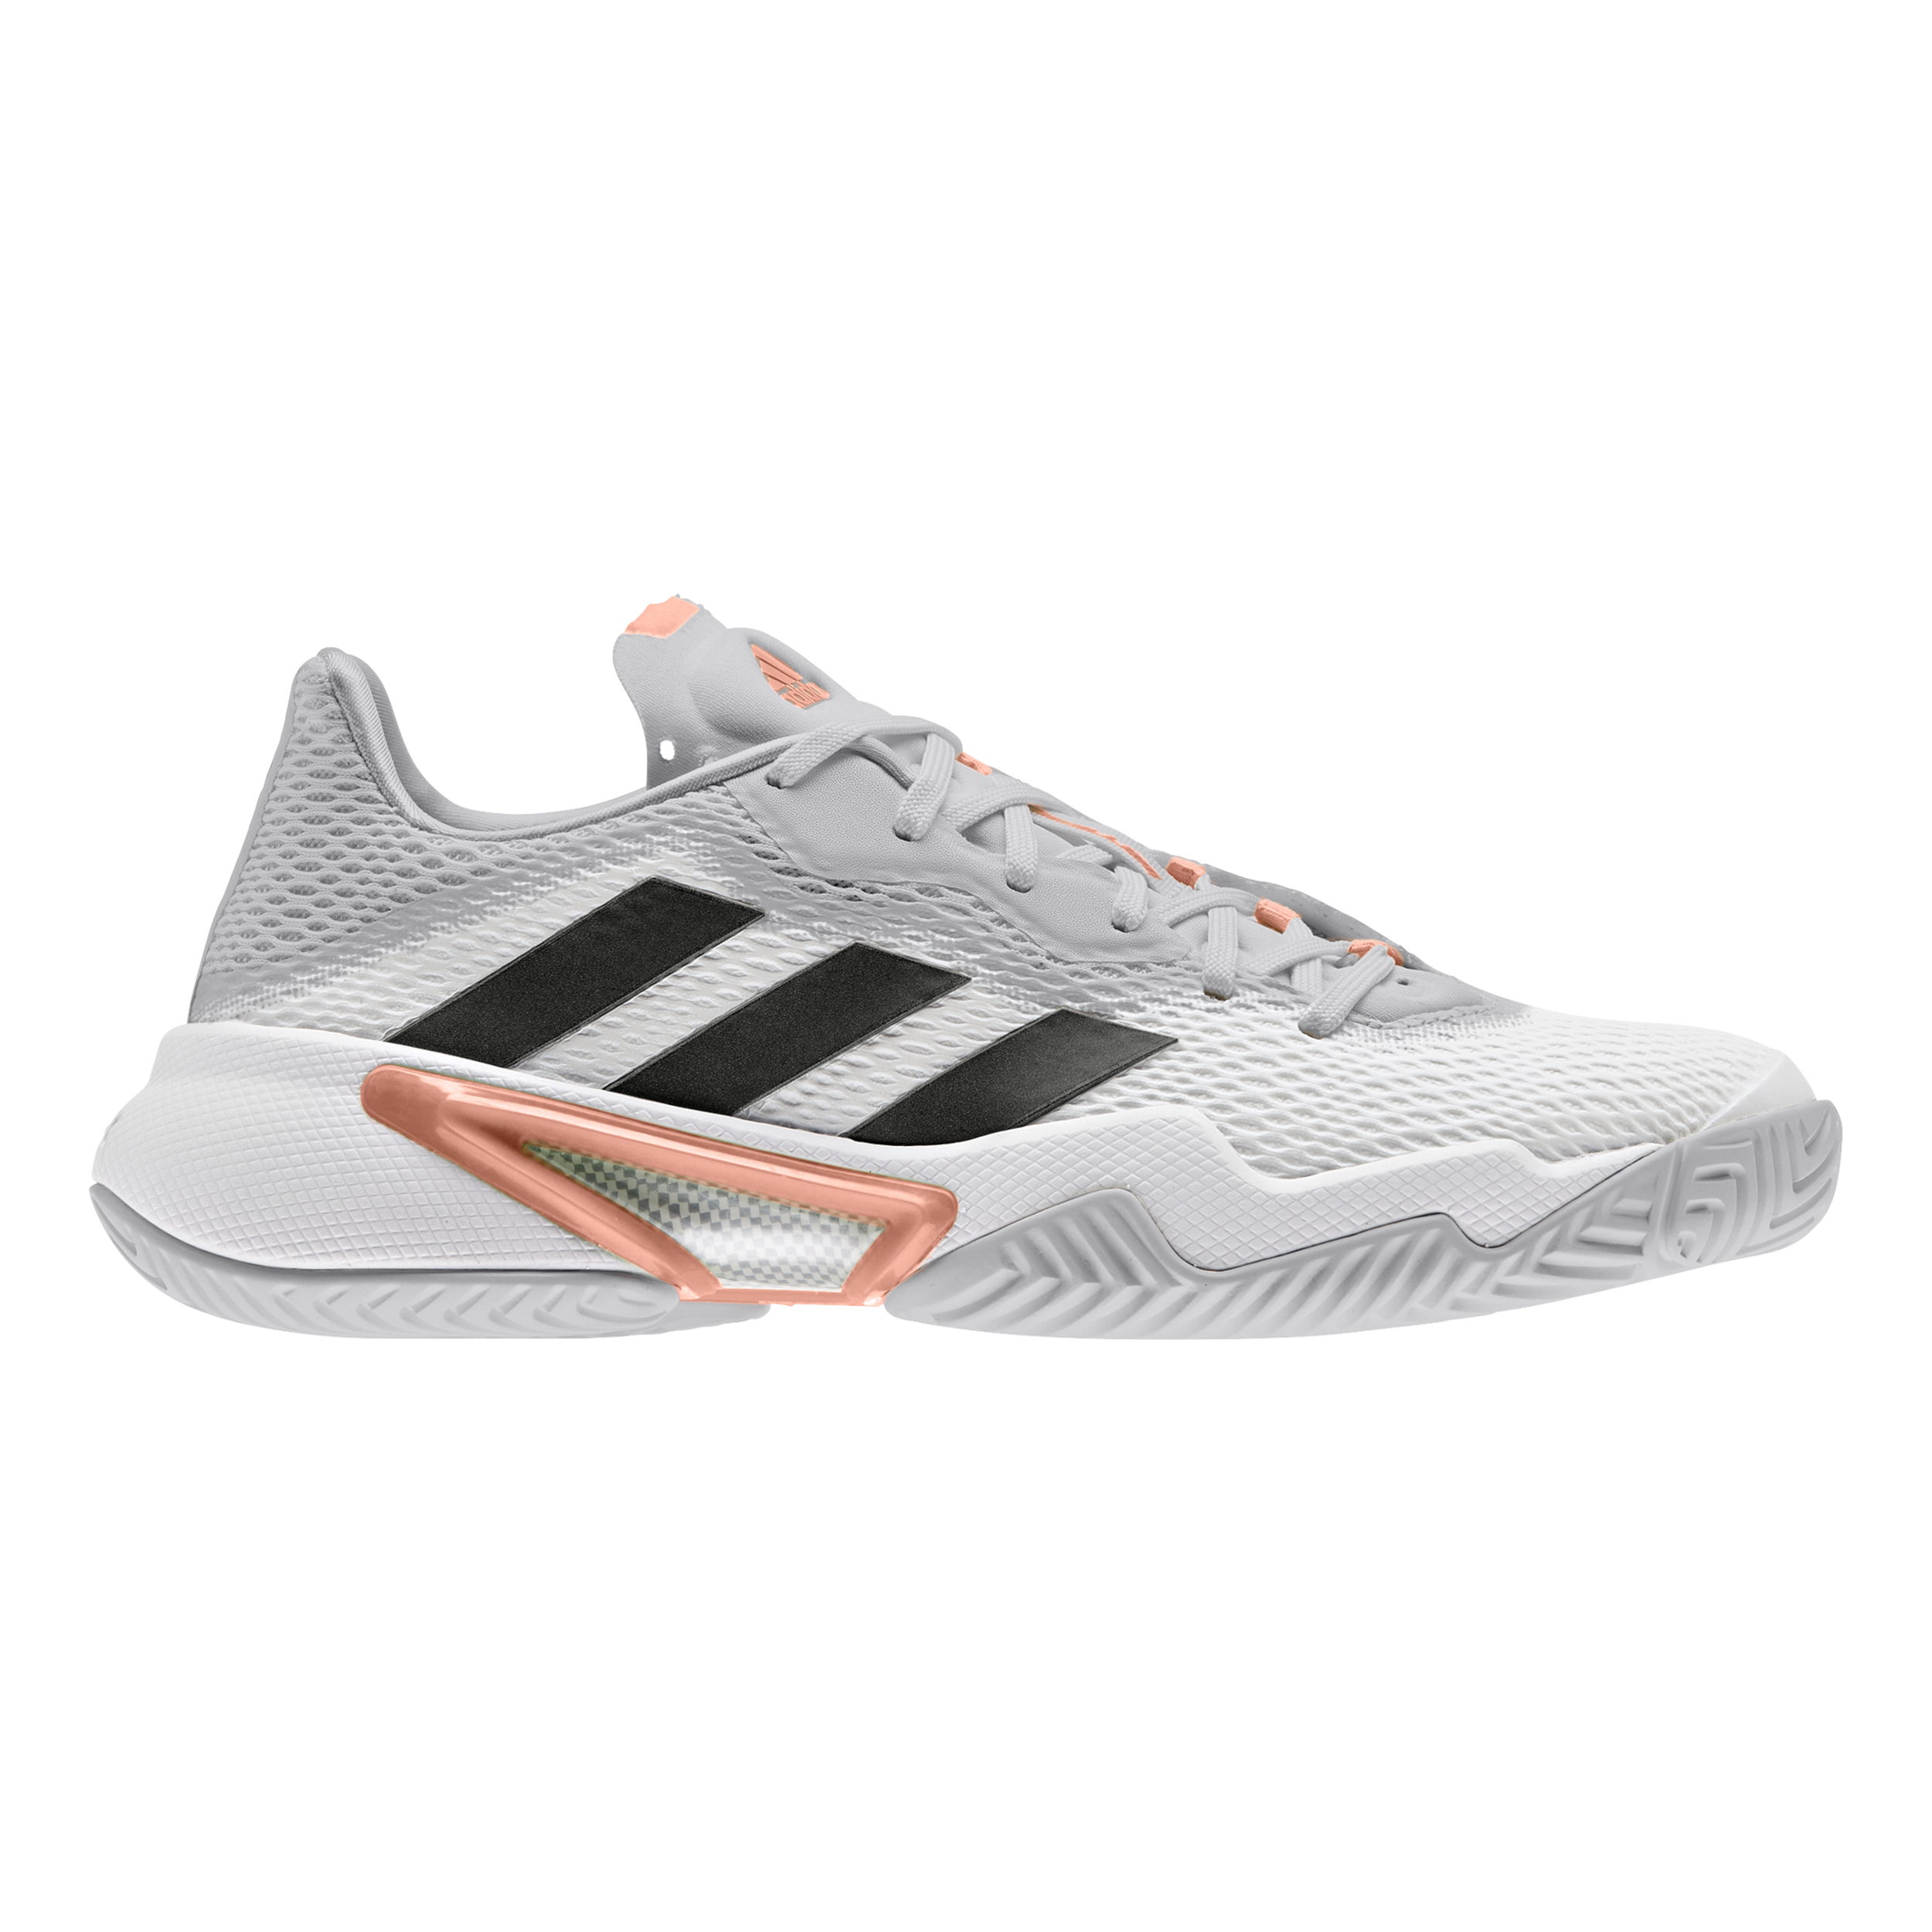 Adidas new york styles 2021 compra online | Tennis Point